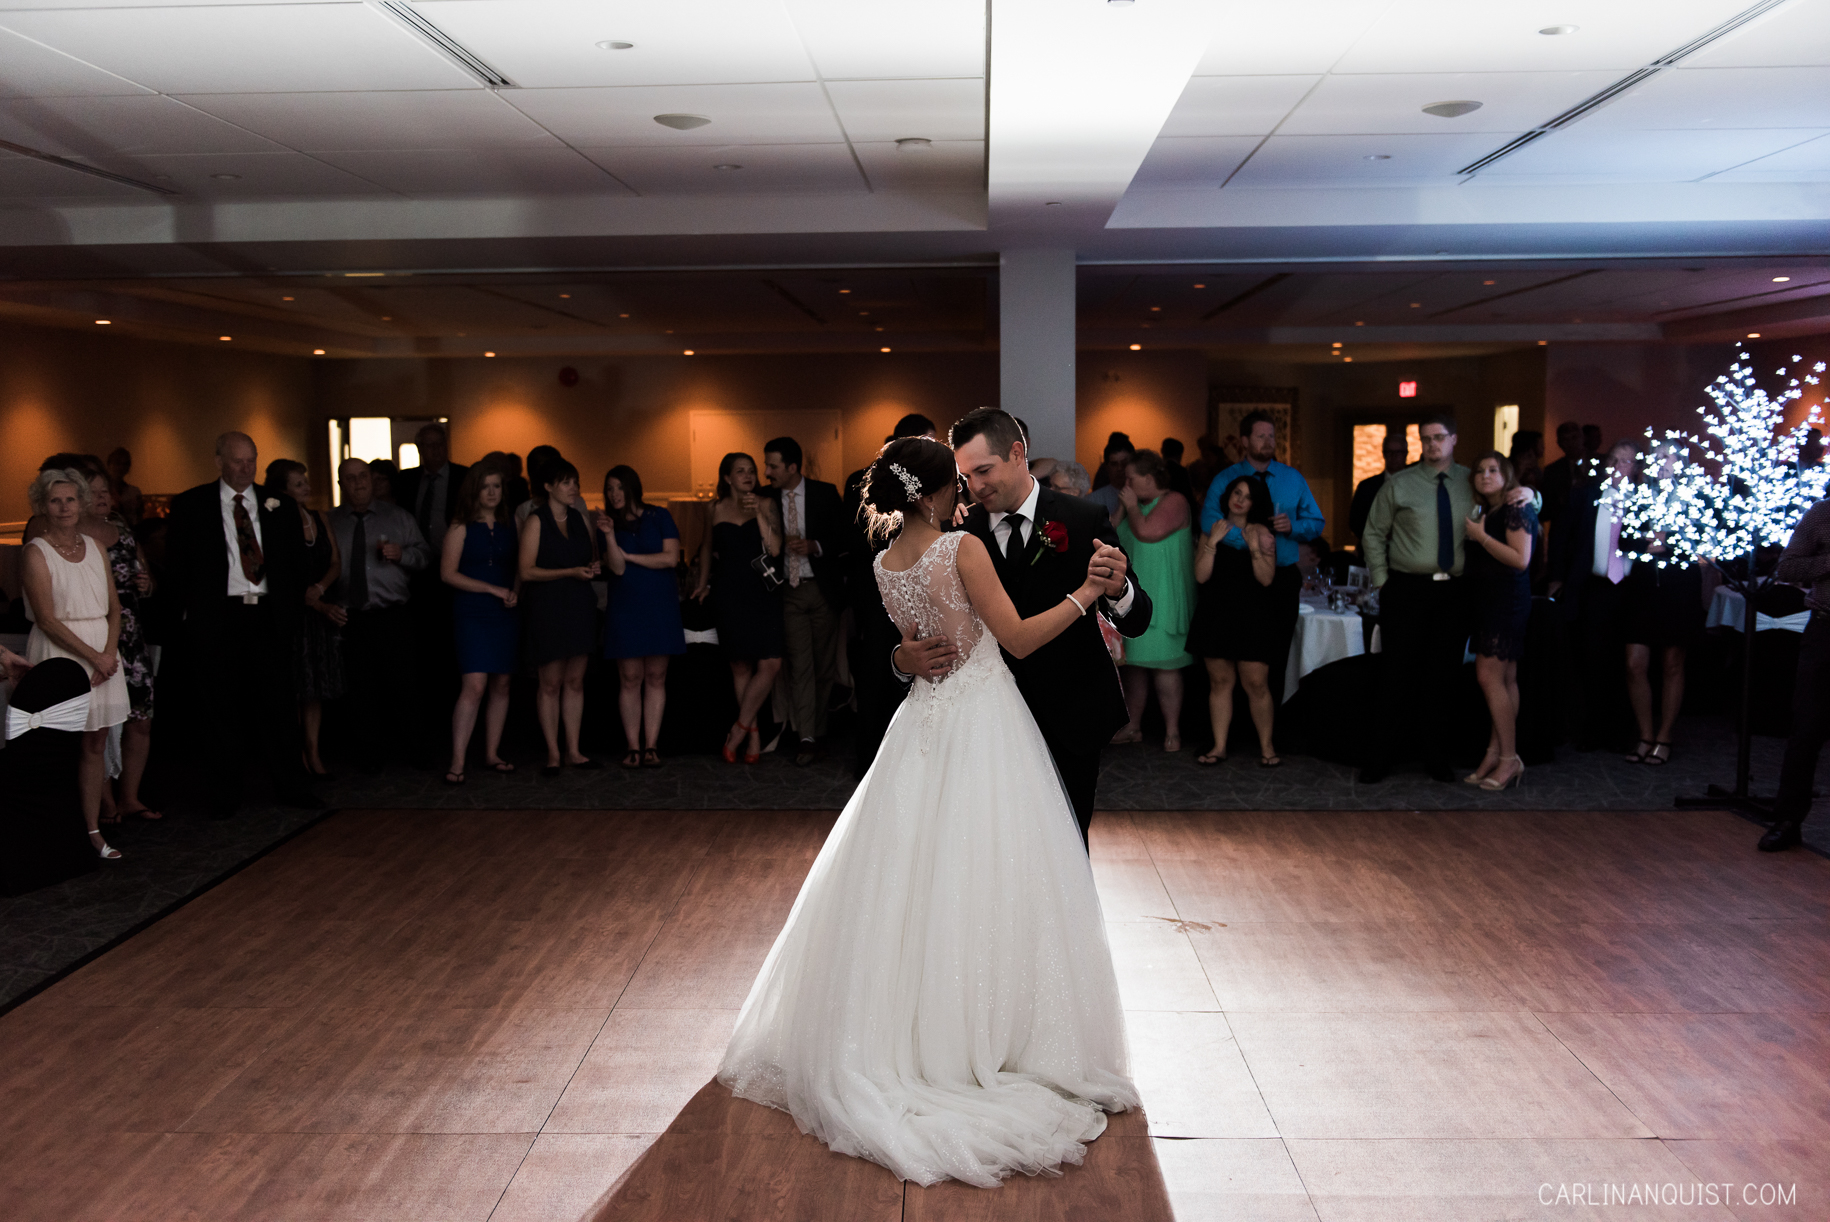 First Dance | Calgary Winter Club Wedding Photographer